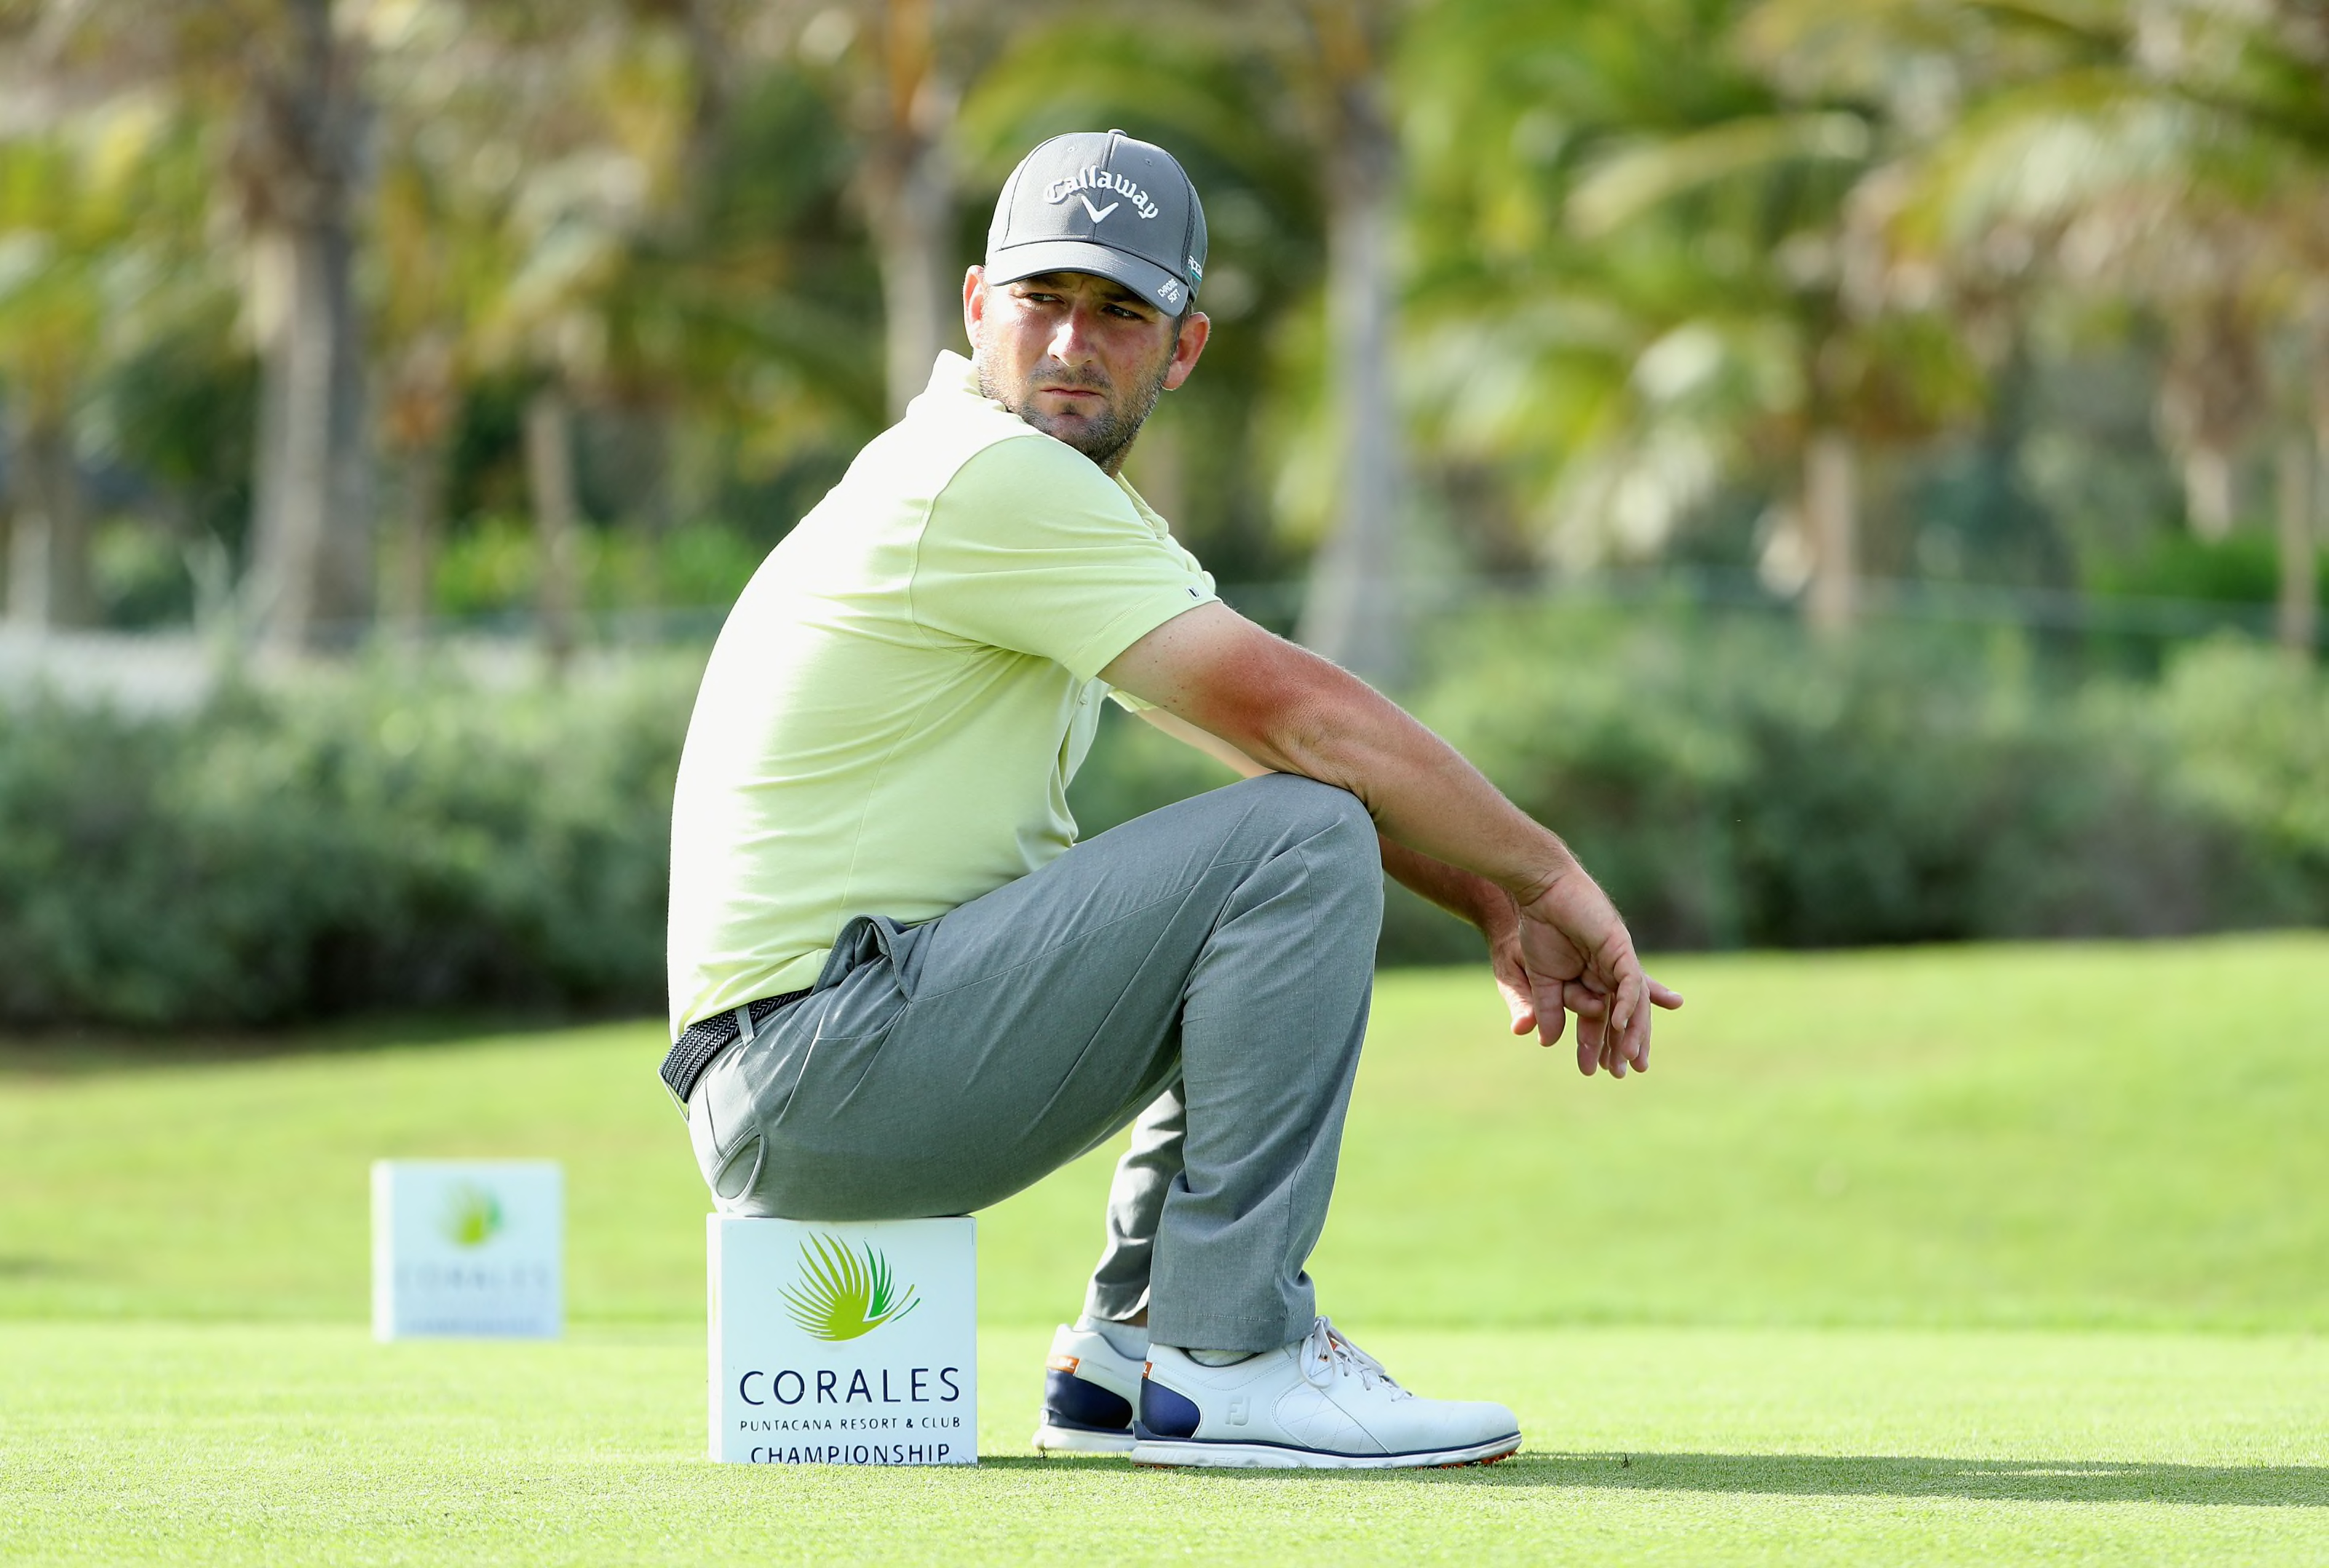 2019 Corales Puntacana Championship PGA DraftKings Picks